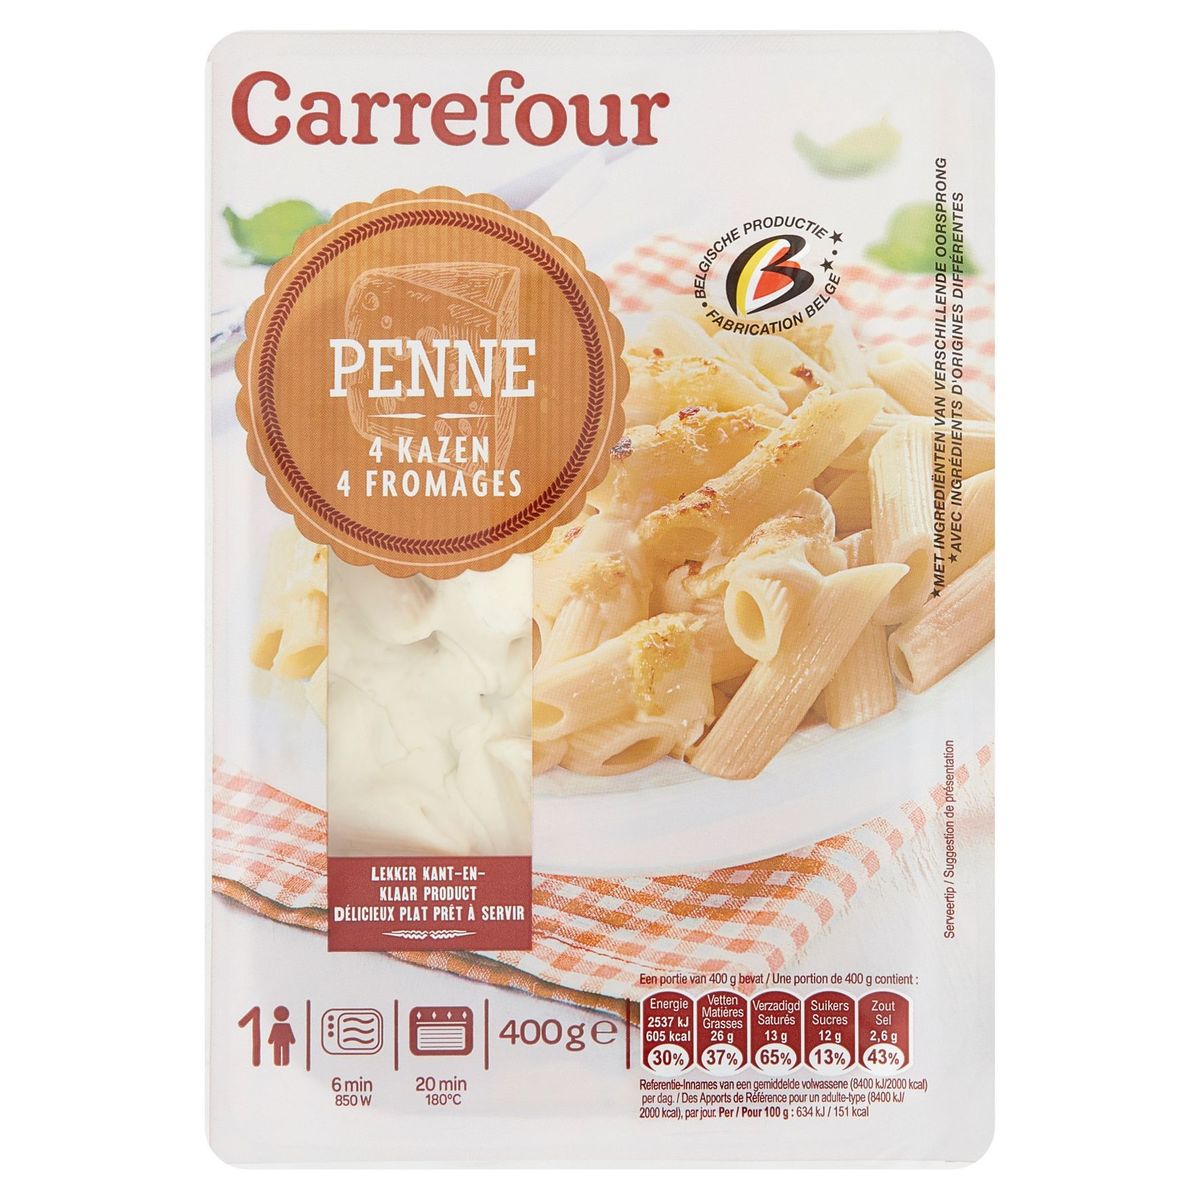 Carrefour Penne 4 Kazen 400 g